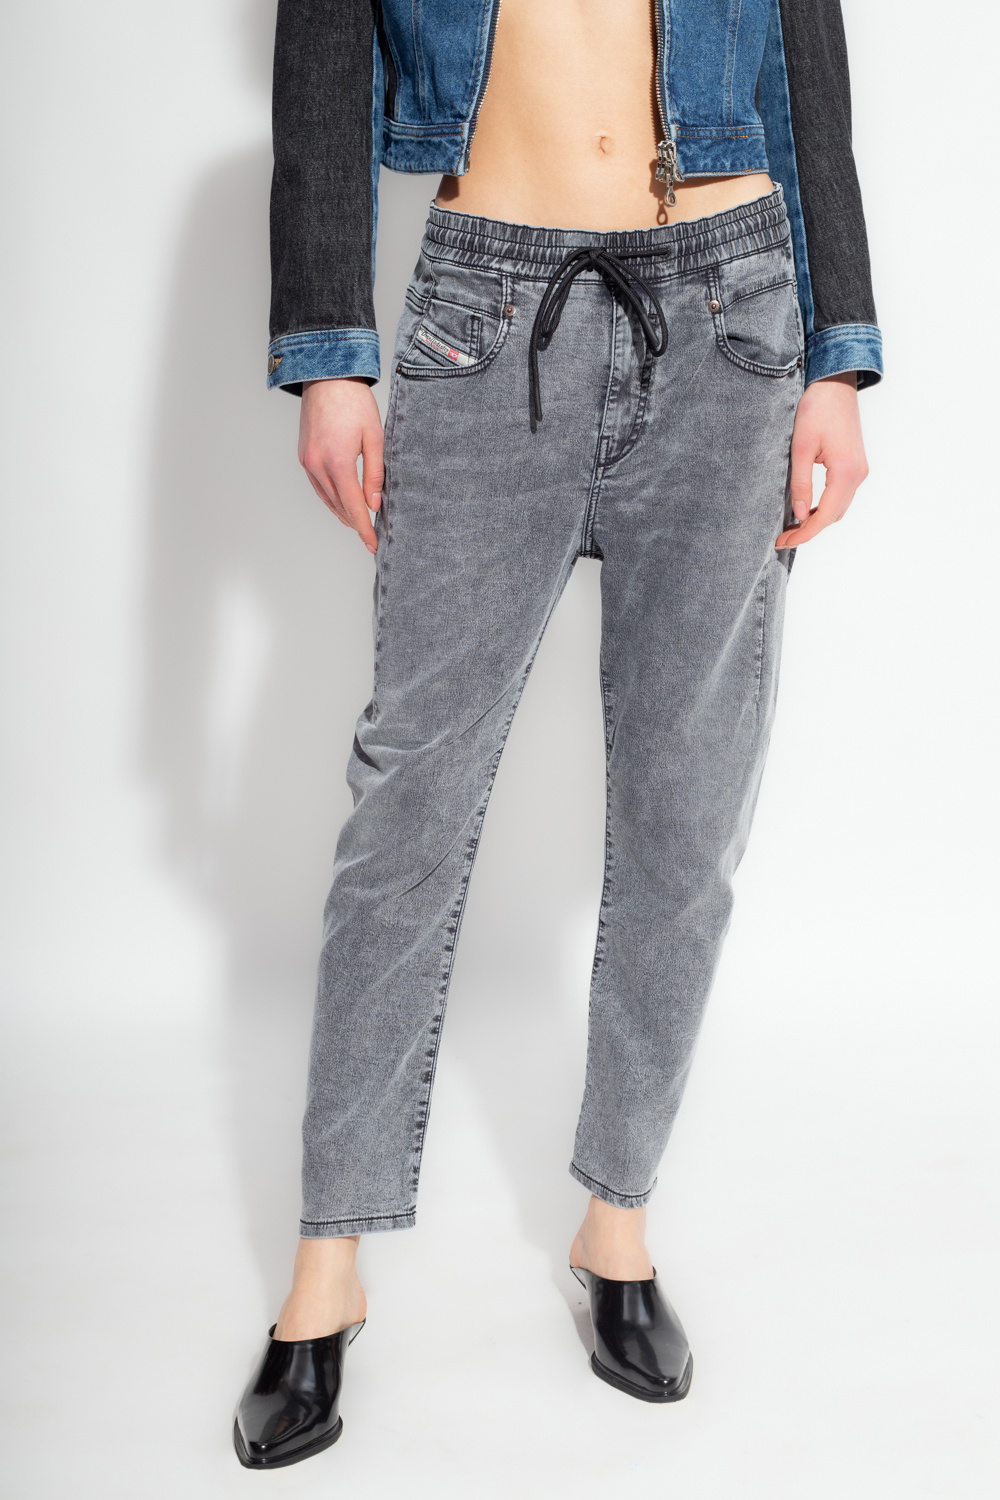 Diesel 'D-FAYZA JOGG' jeans | Women's Clothing | Vitkac